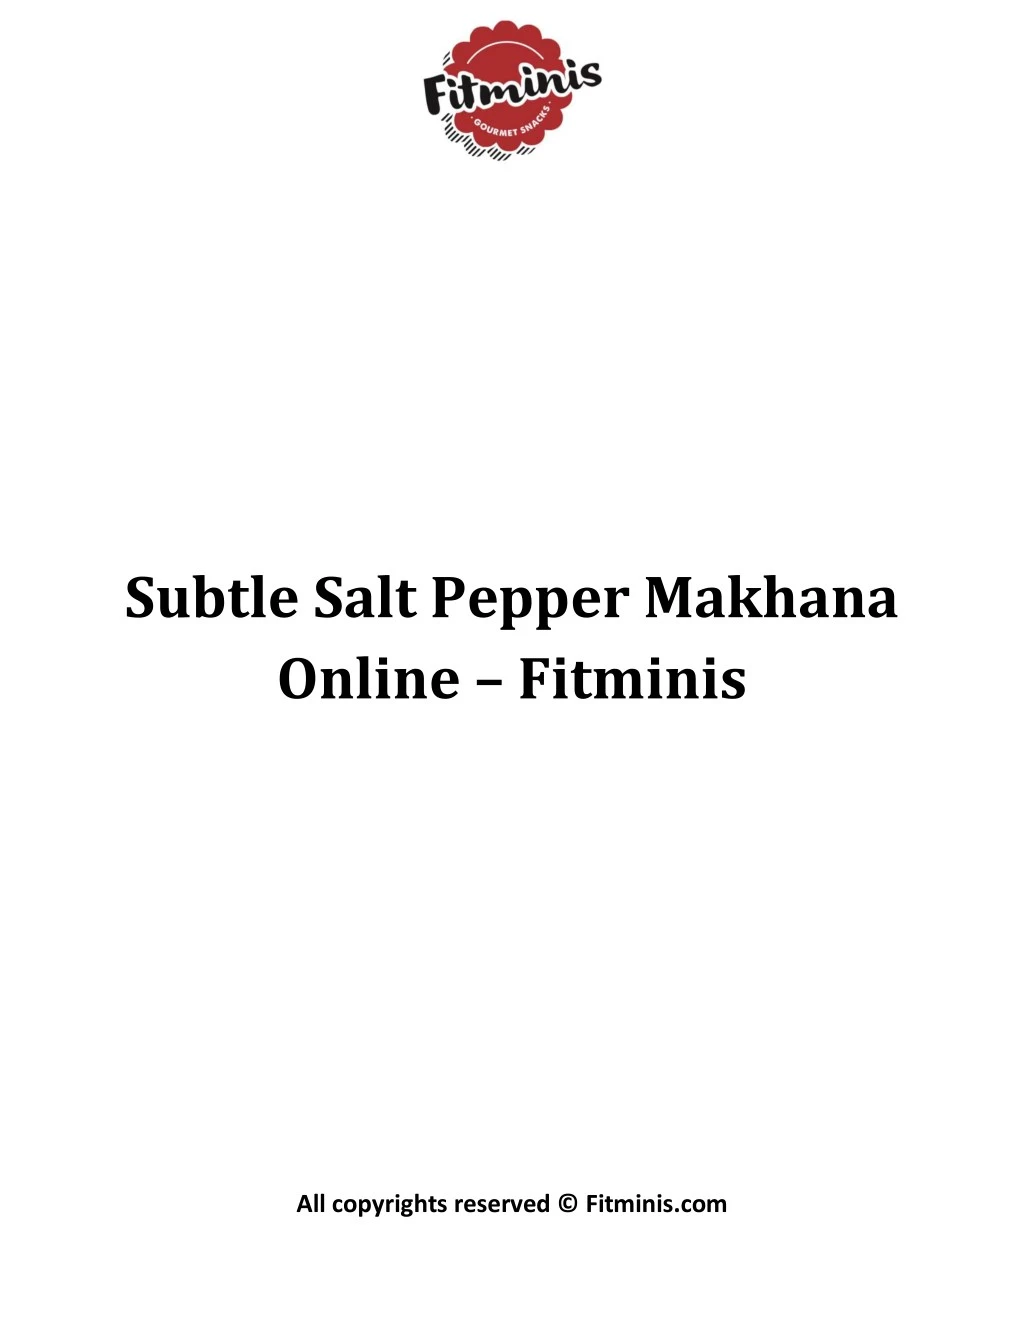 subtle salt pepper makhana online fitminis